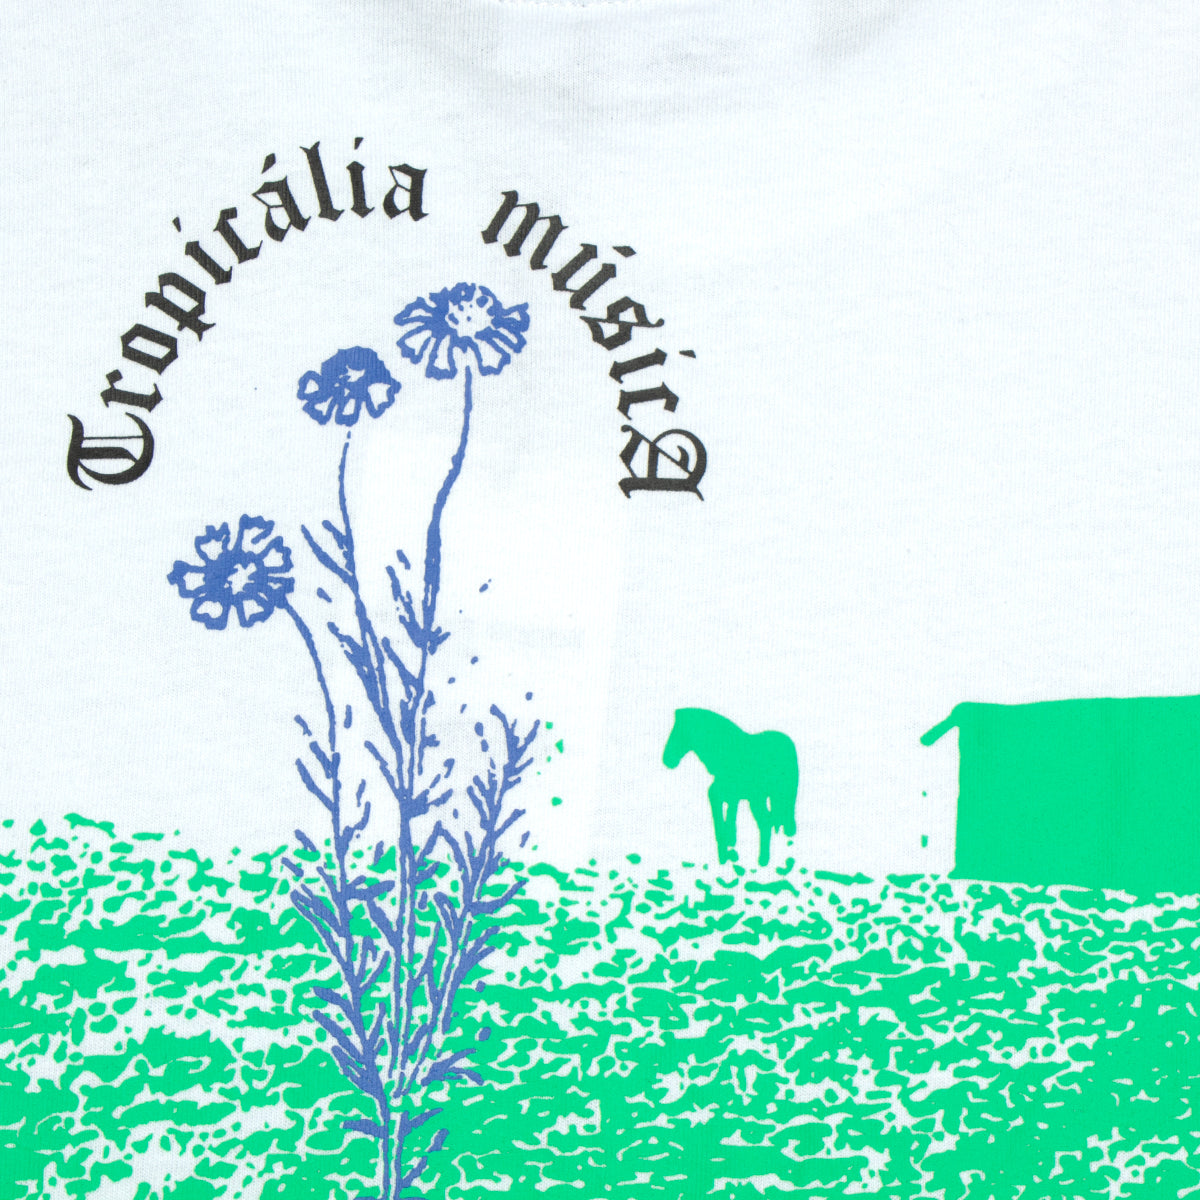 Butter Goods | Tropicalia T-Shirt Color : White